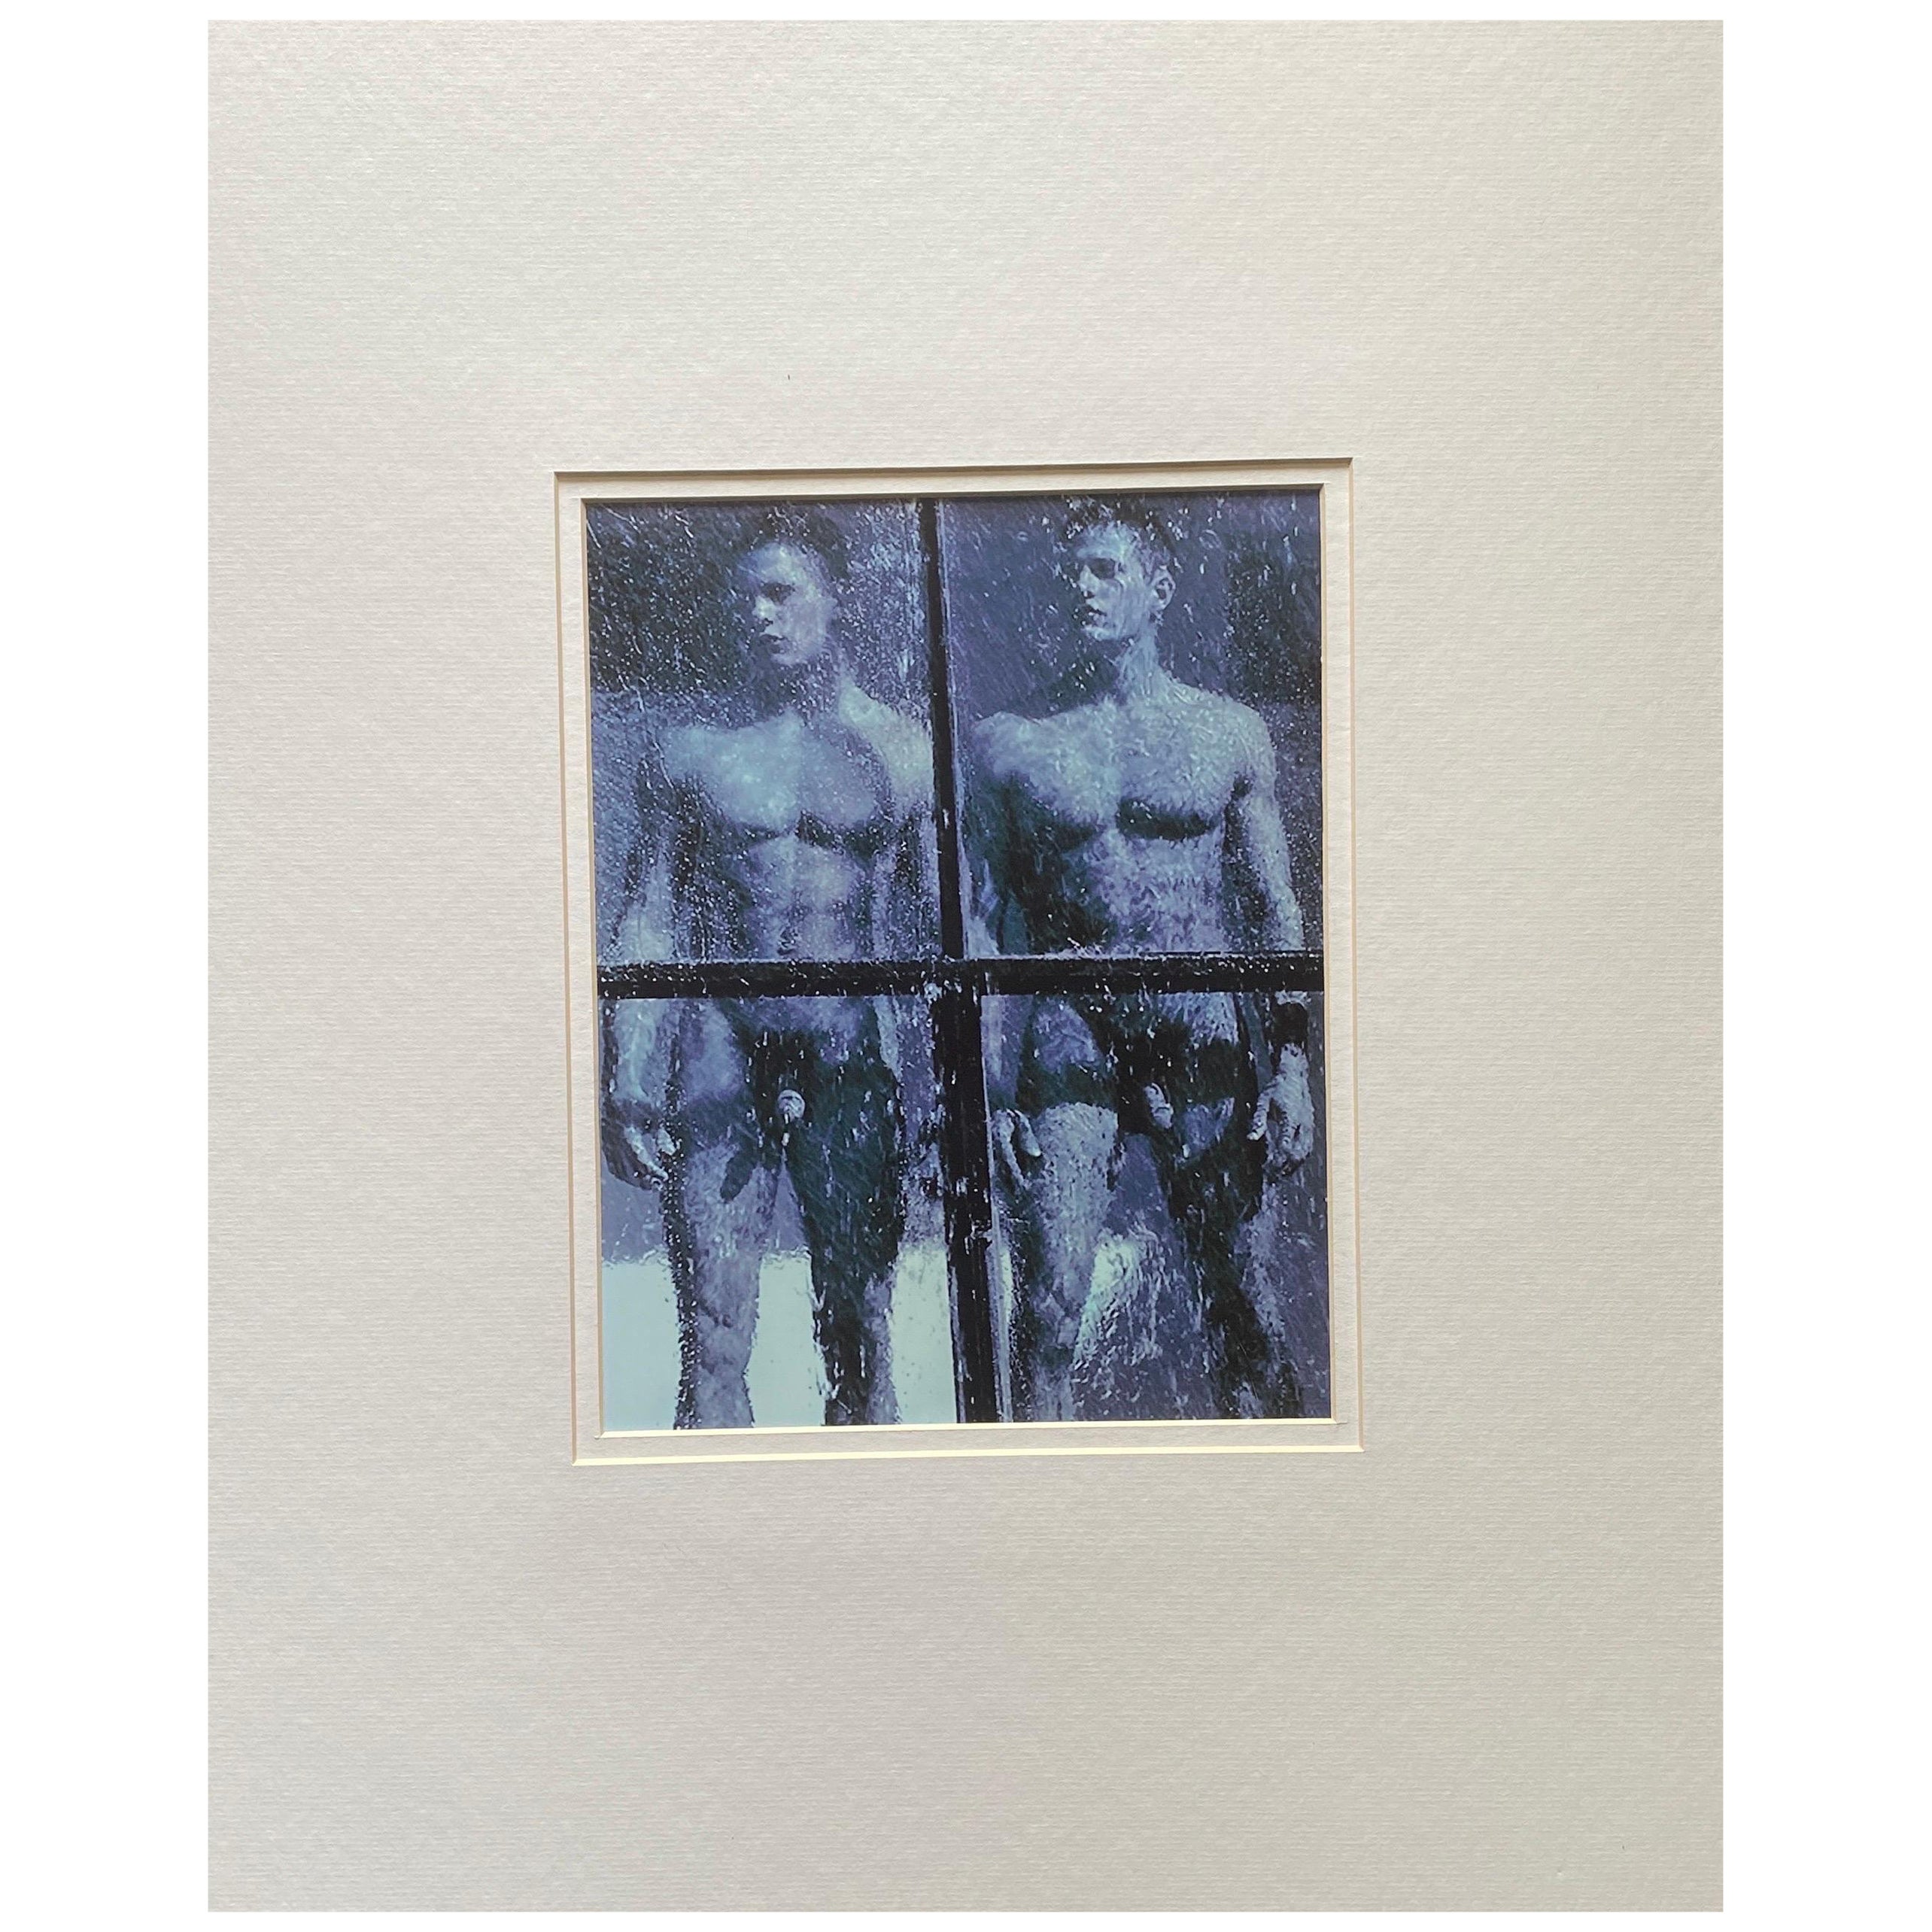 Lámina de Bruce Weber de Los gemelos Carlson, 2000, Tono a mano, Desnudo masculino nº 1 en mate  